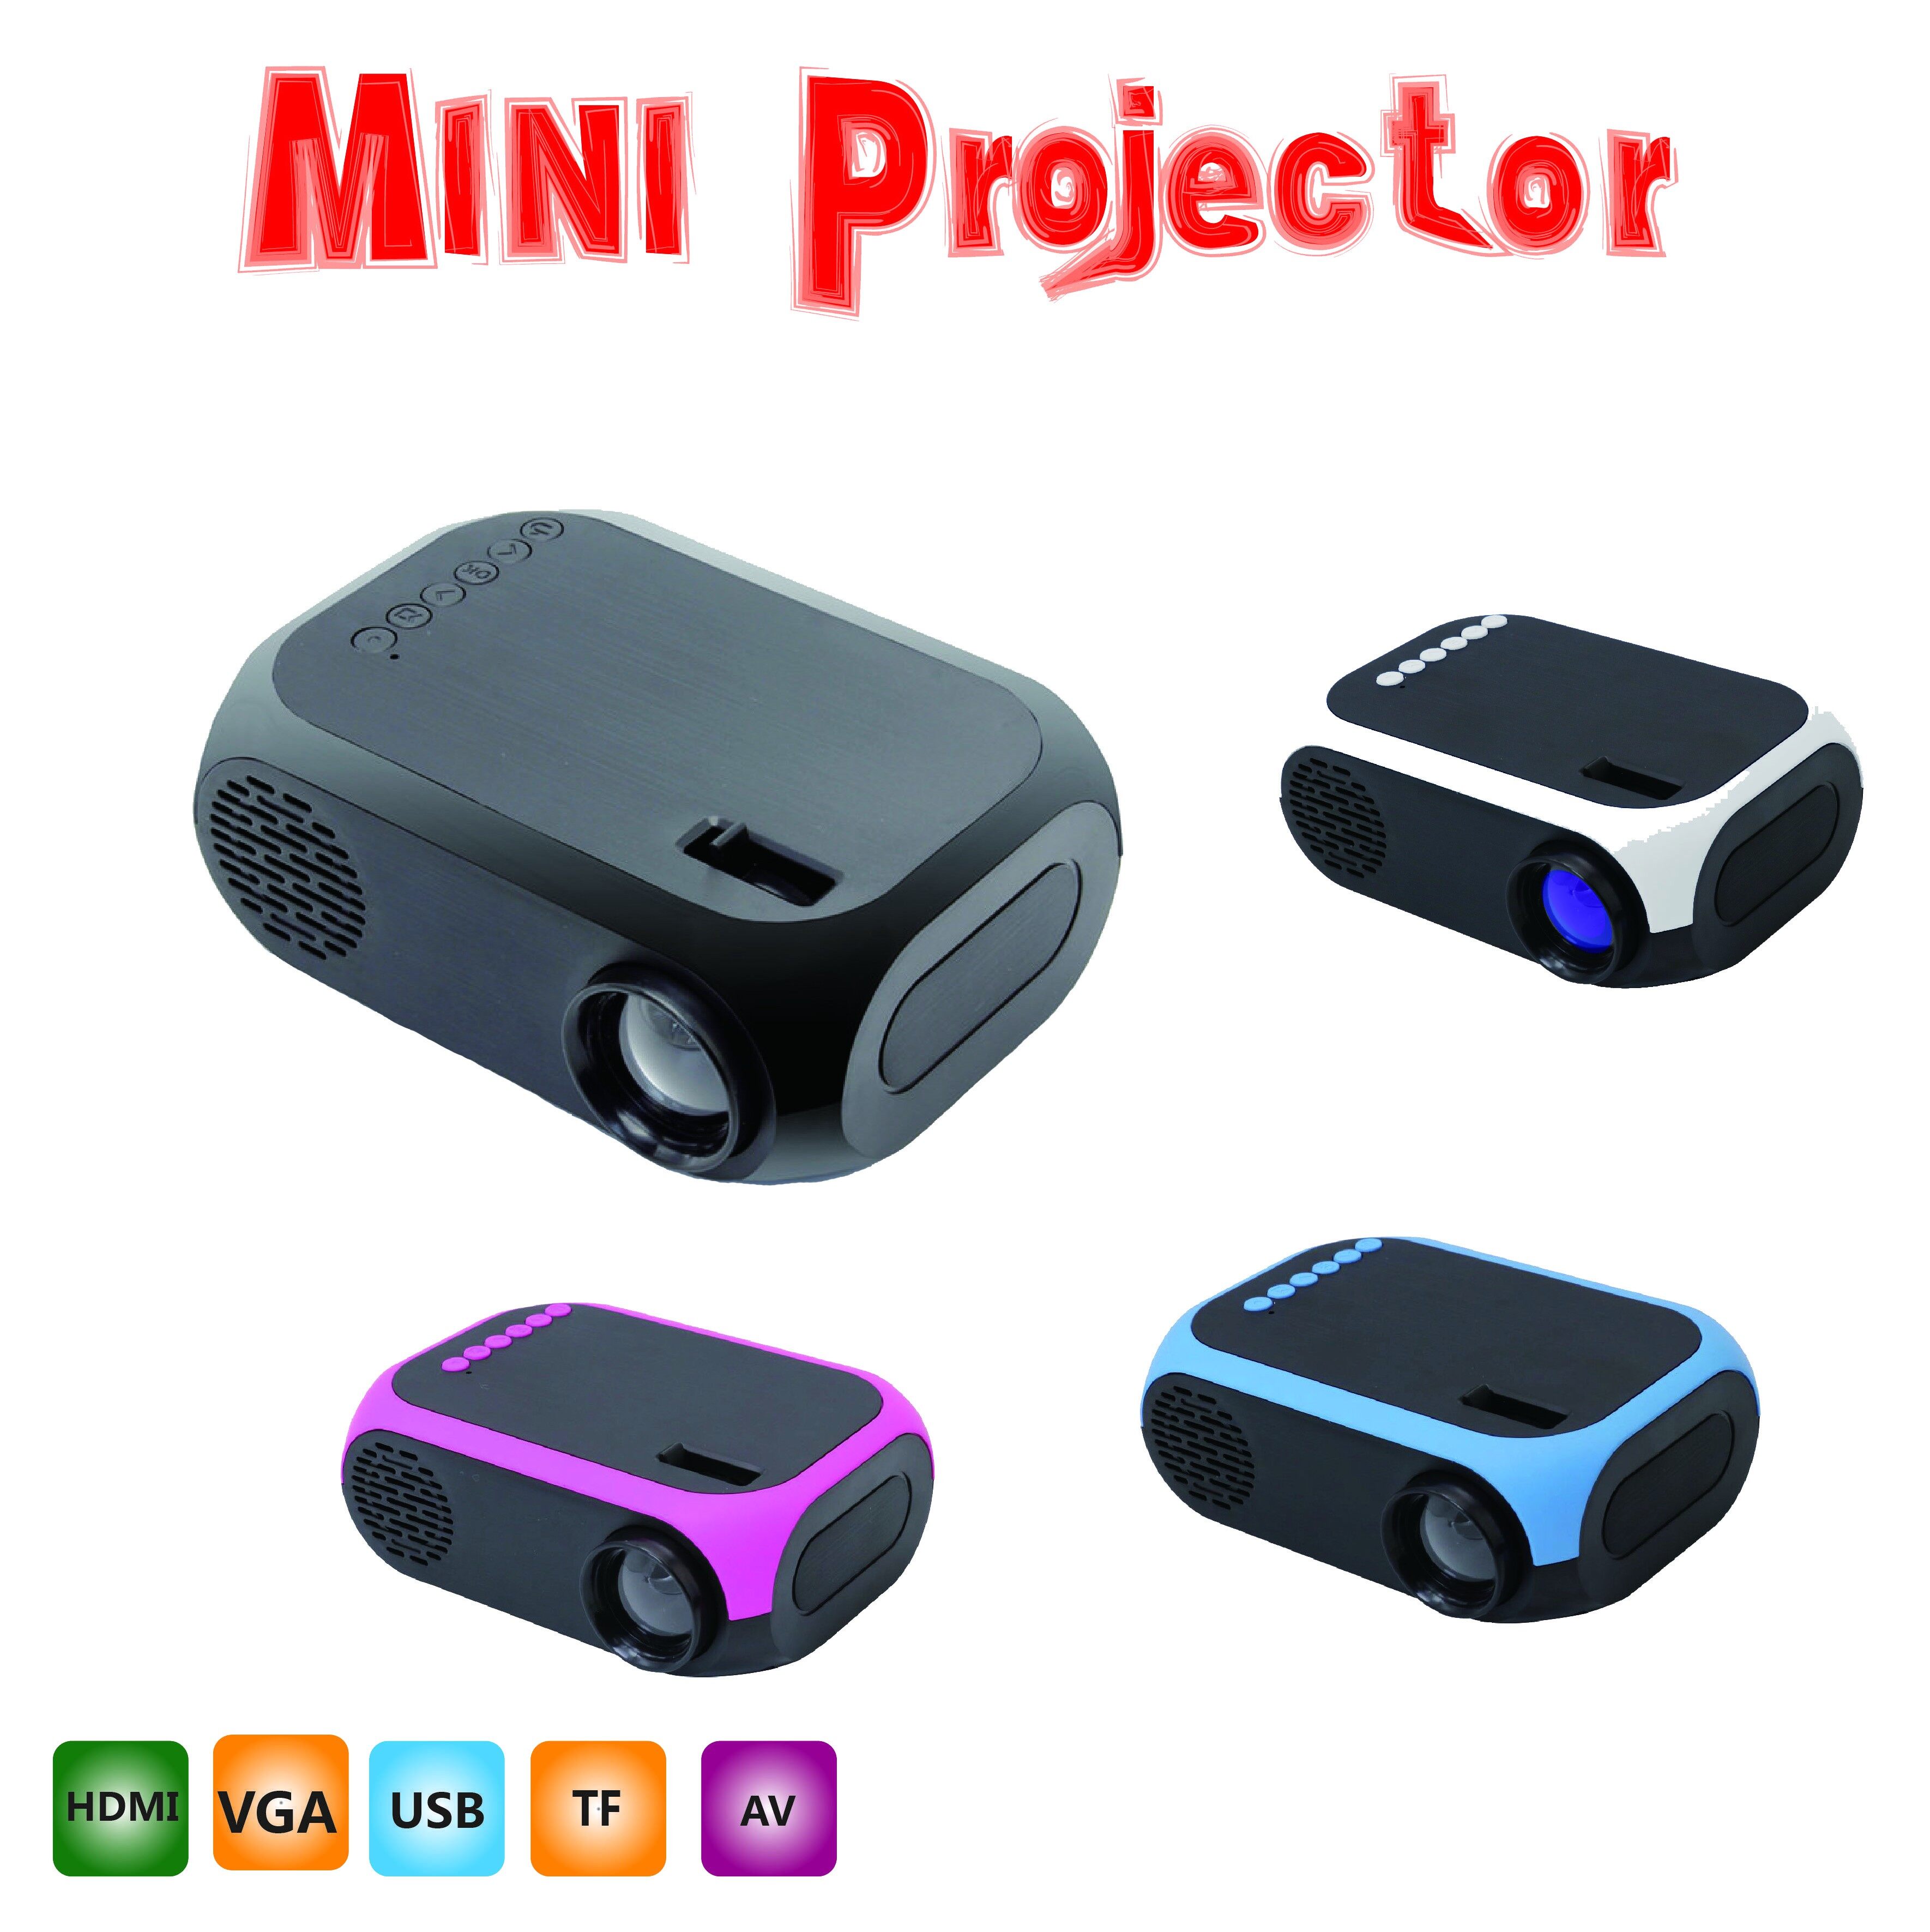 LED Porjector mini สมาร์ทโปรเจคเตอร์ mini projector รุ่น BLJ-111 มินิโปรเจคเตอร์ โปรเจคเตอร์ขนาดพกพา สมาร์ทโปรเจคเตอร์ โปรเจคเตอร์ฉายหนัง